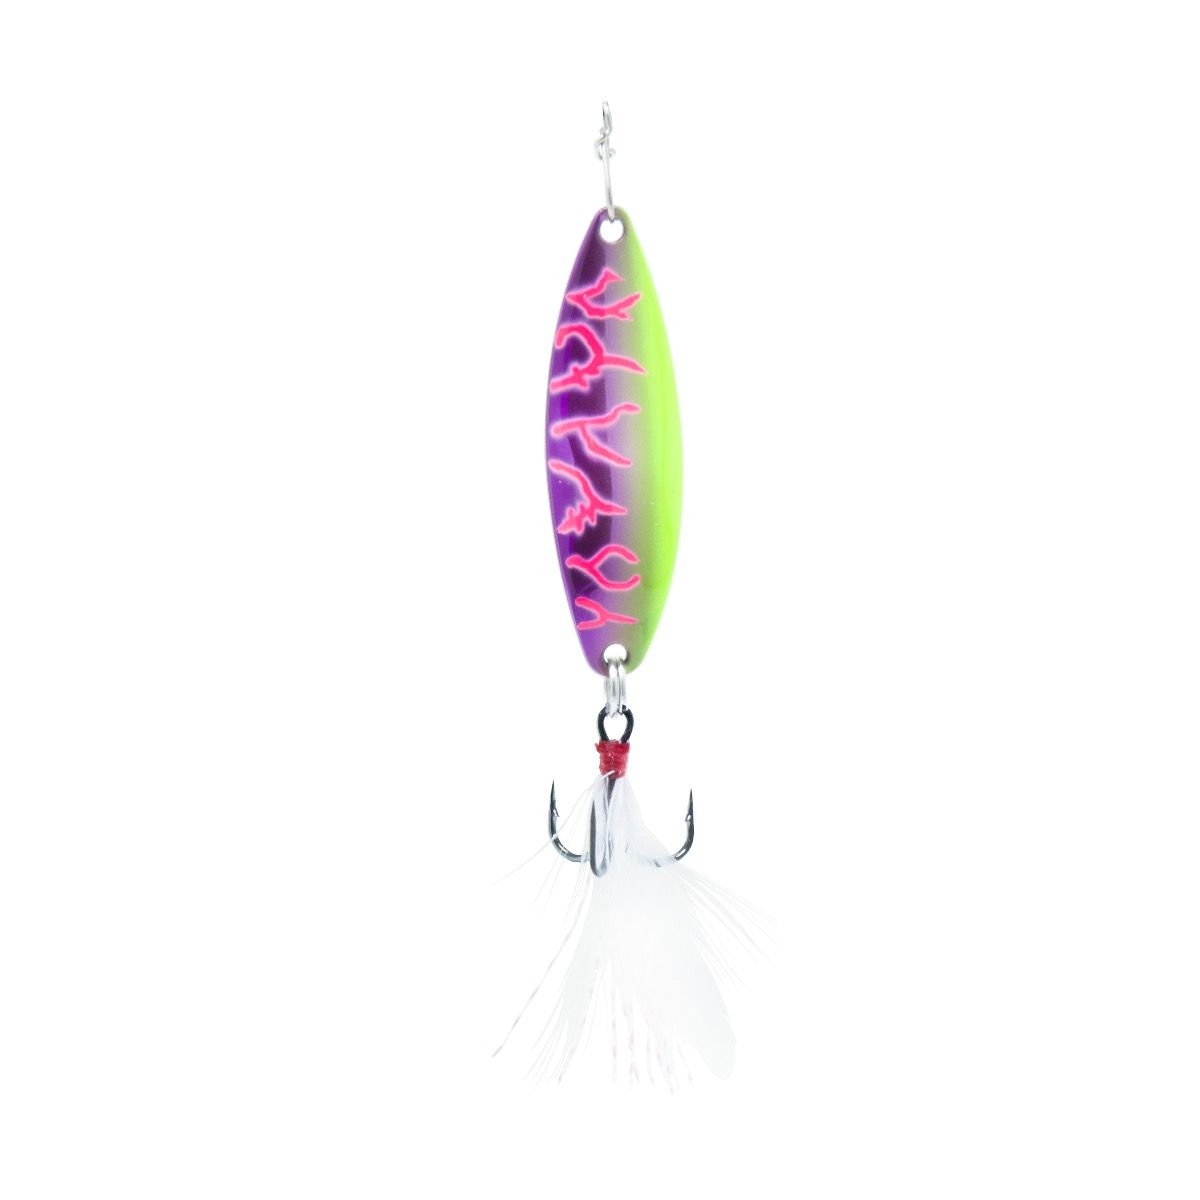 Clam Leech Flutter Spoon - Glow Pink Lightning - 1/16oz